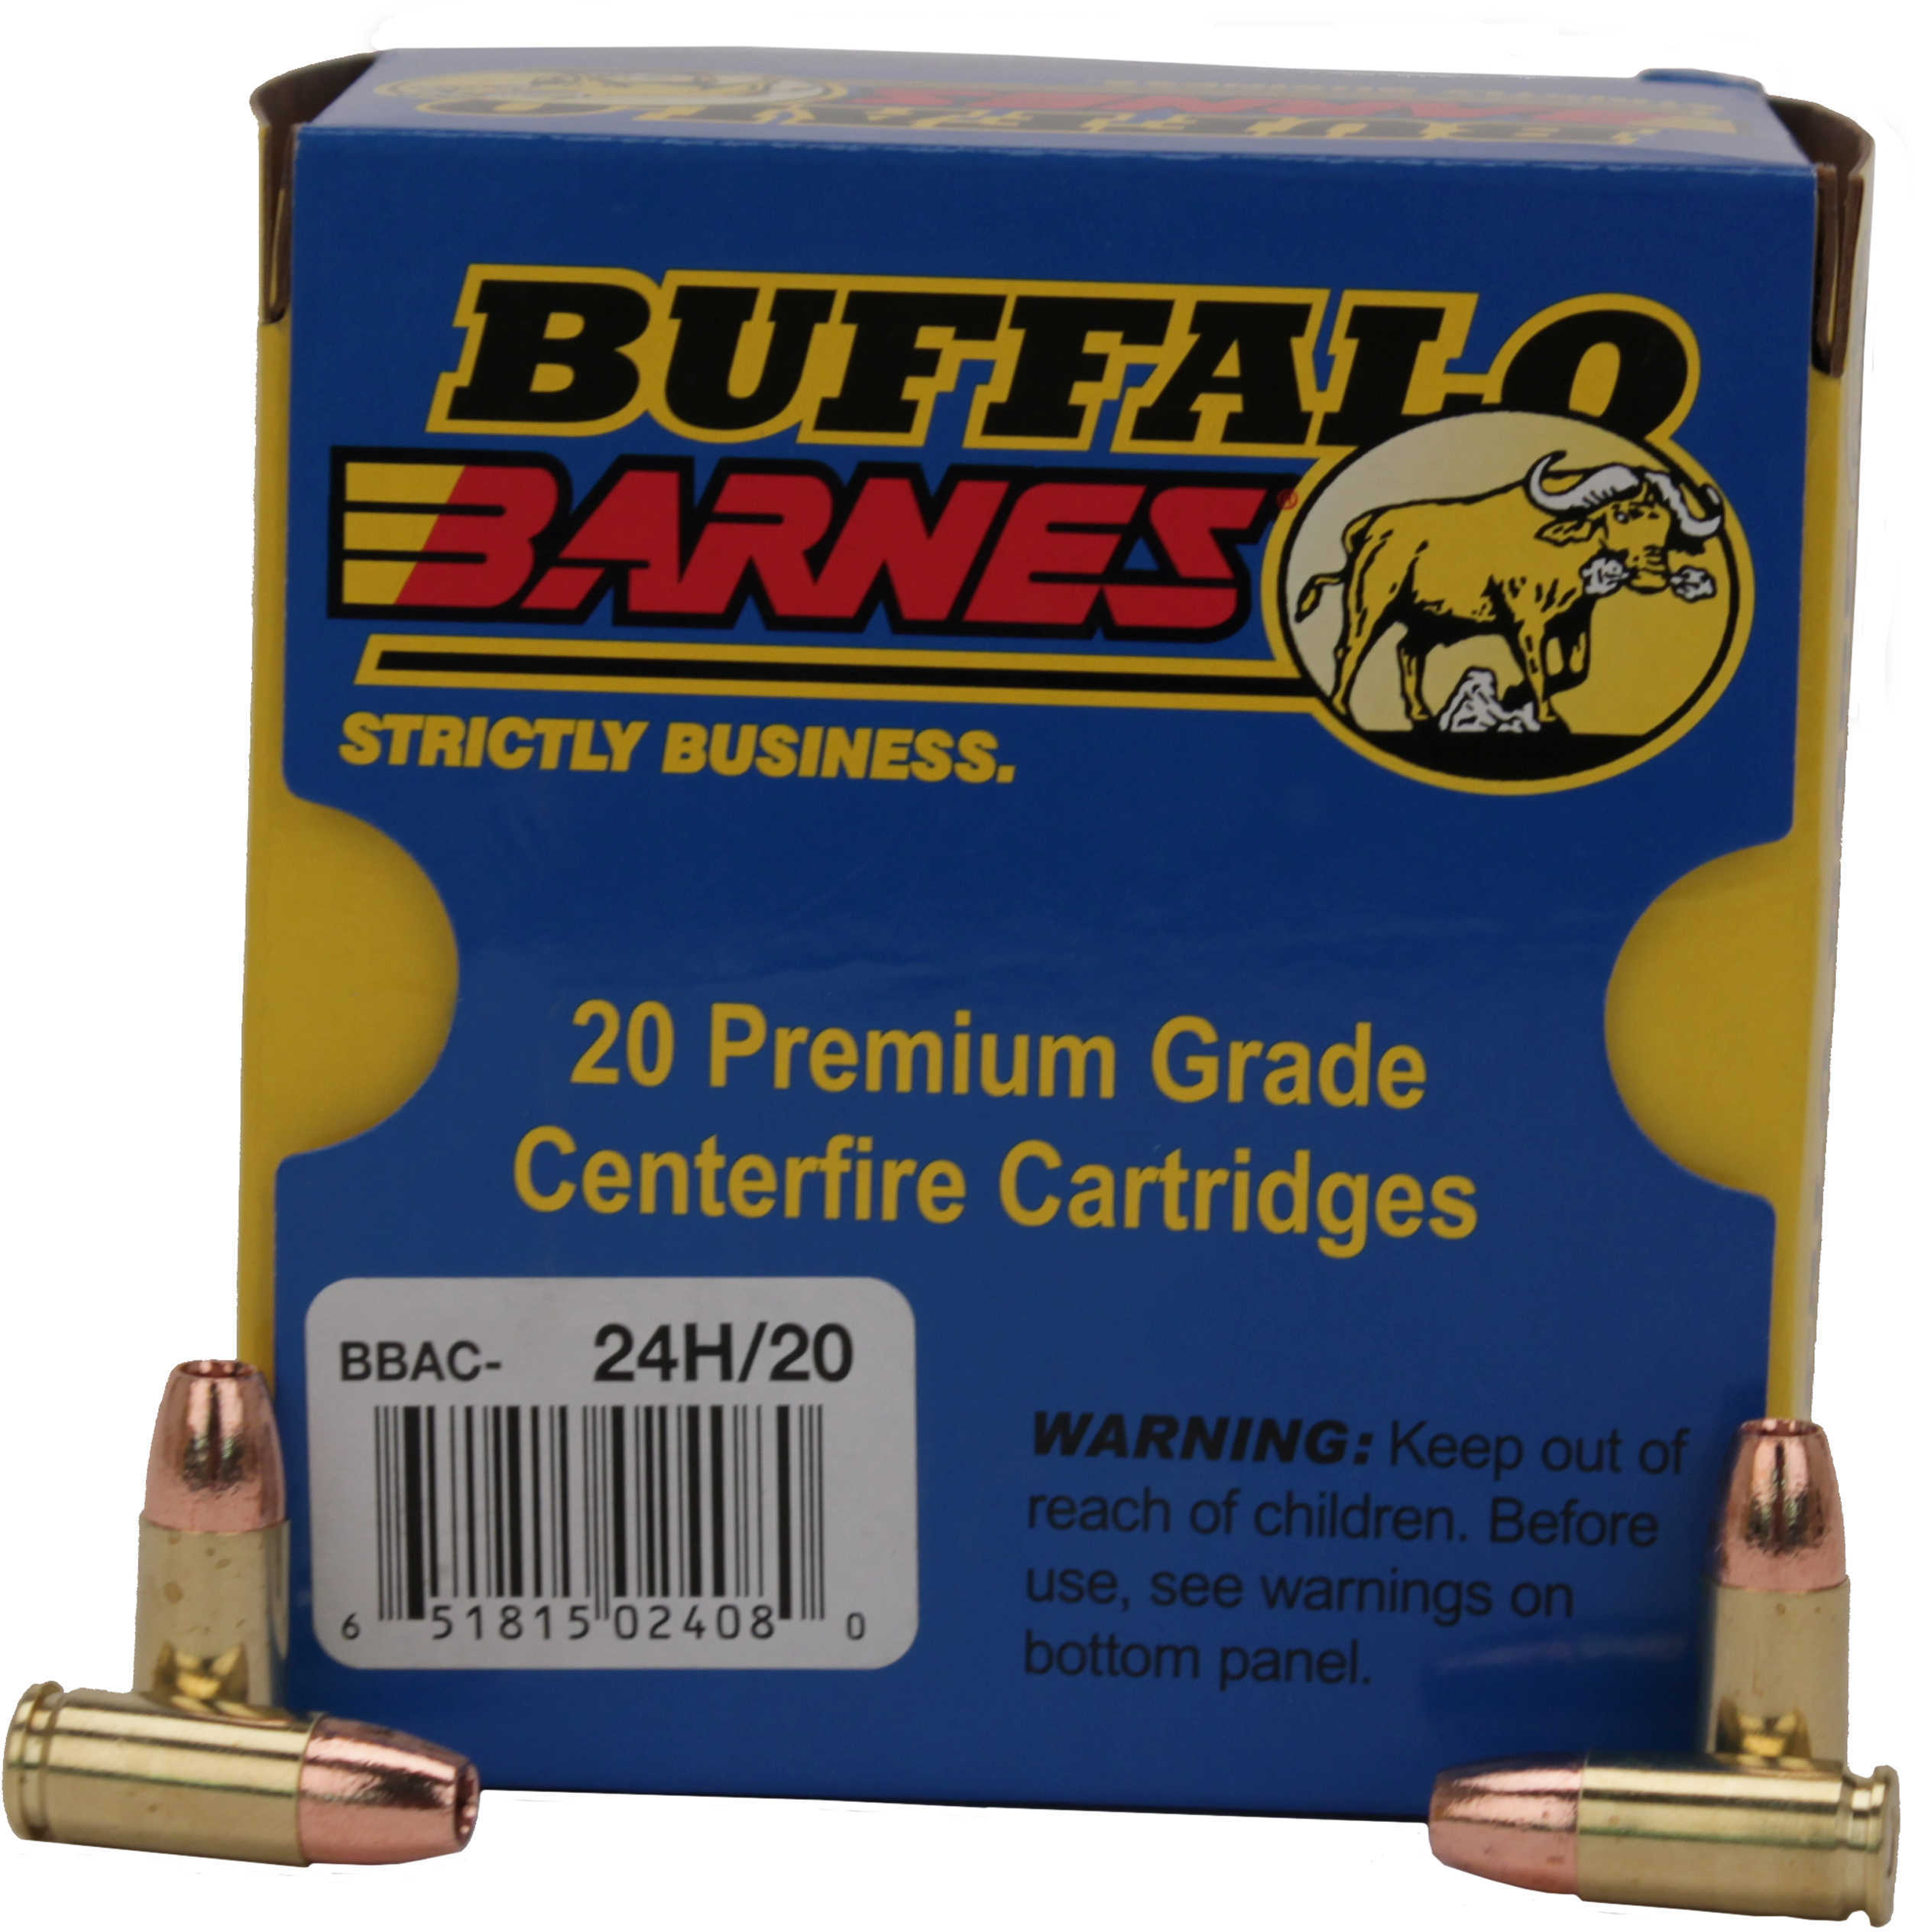 9mm Luger 115 Grain Hollow Point 20 Rounds Buffalo Bore Ammunition